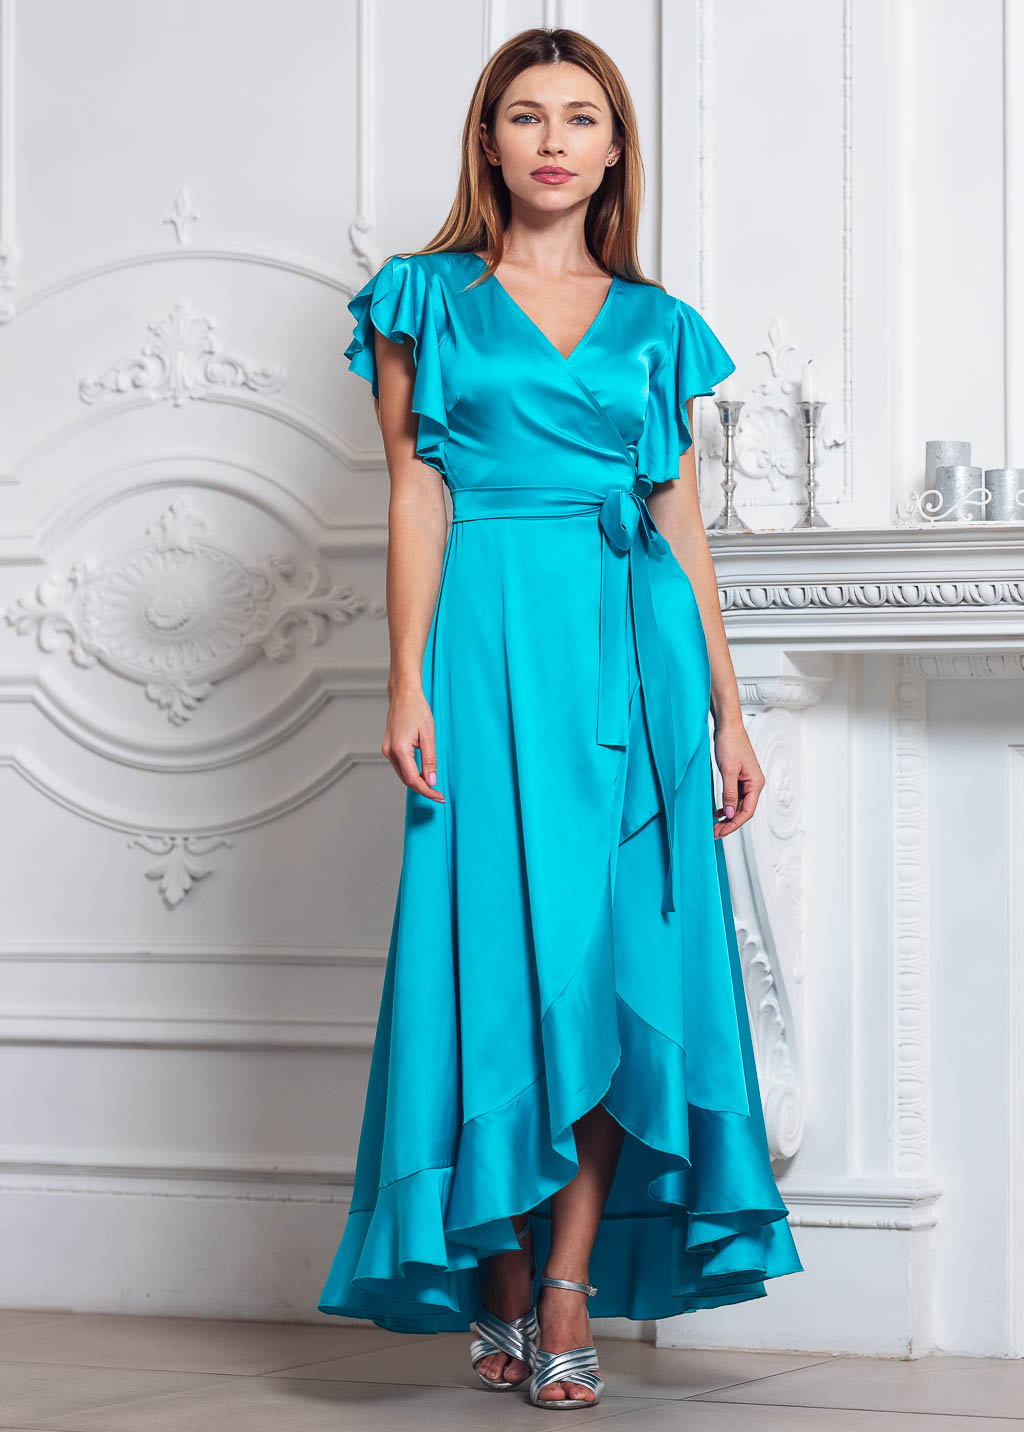 Turquoise wrap dress